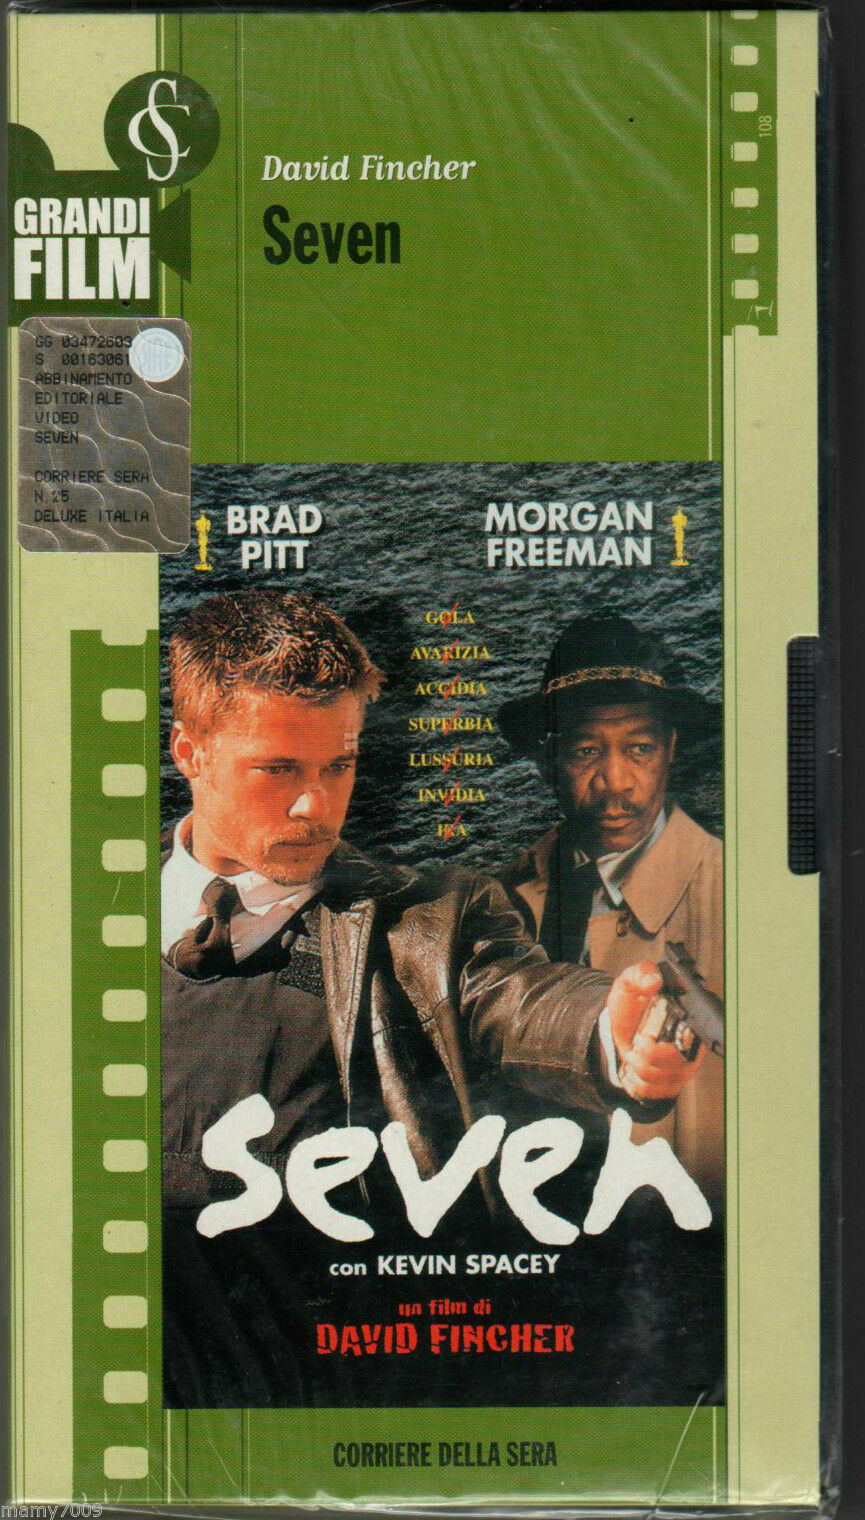 VHS film cartonata SEVEN Brad Pitt Morgan Freeman - 2002 - corriere della sera-F